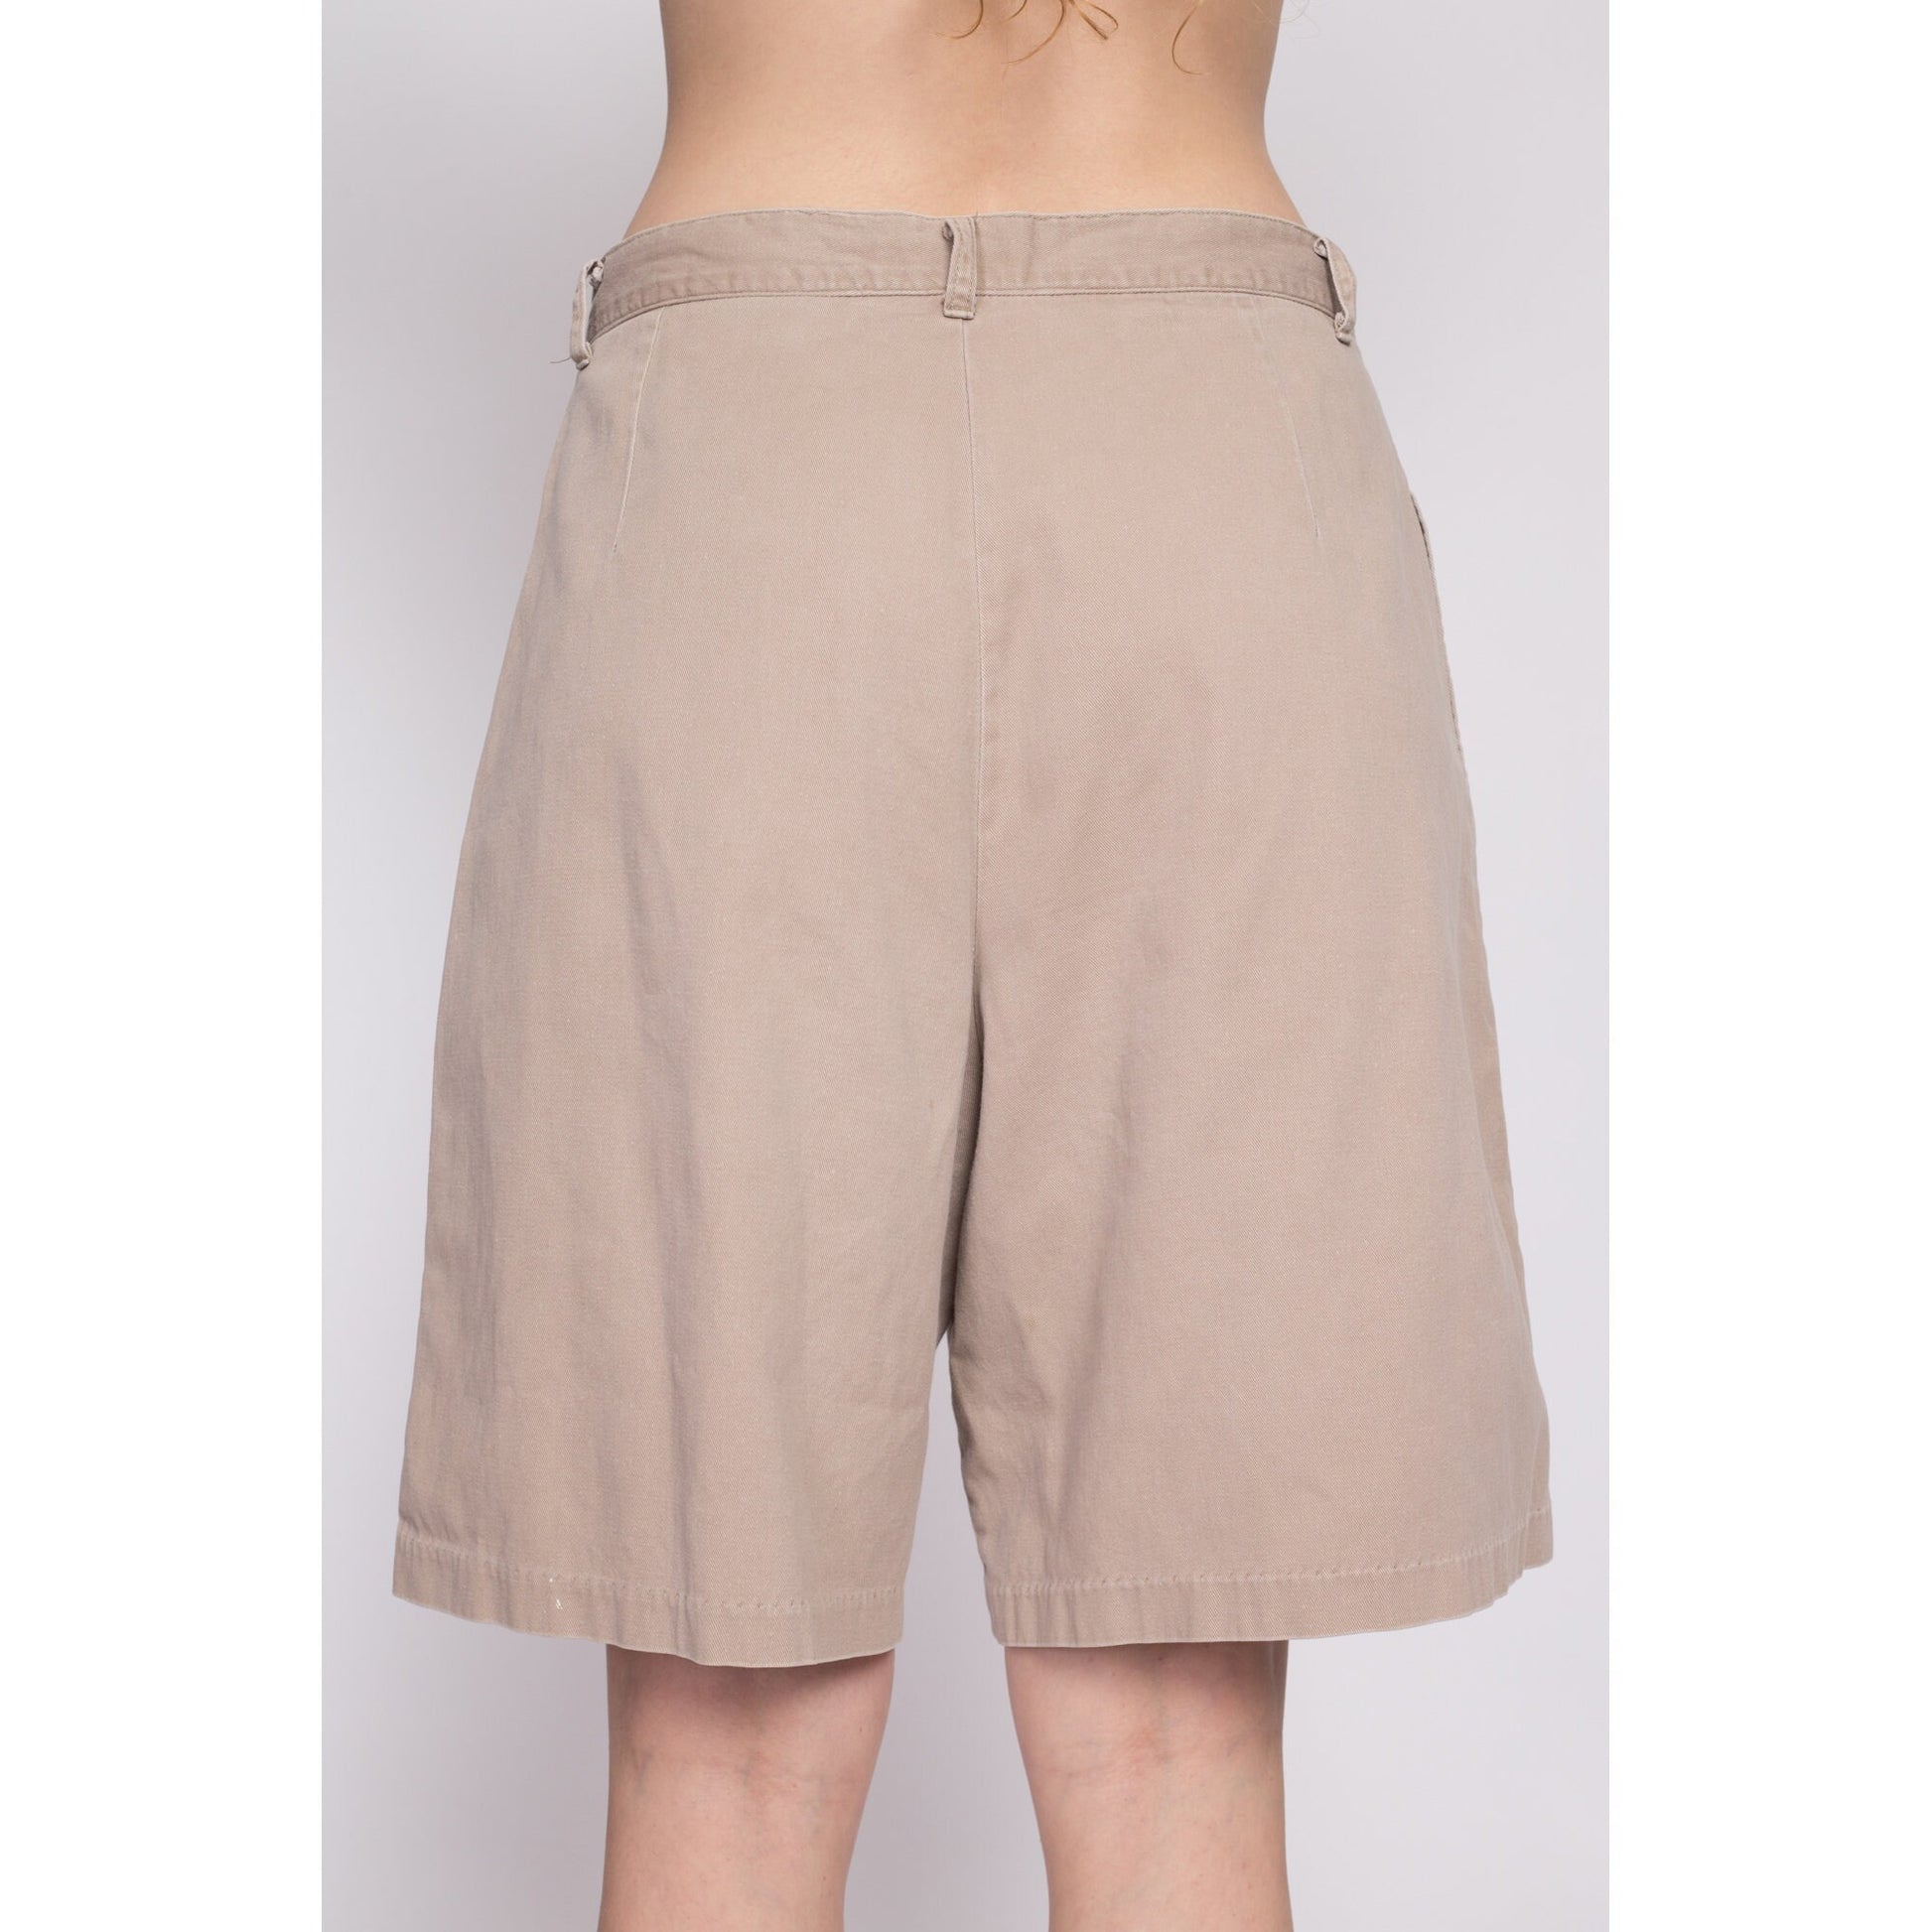 80s Khaki Pleated Cotton Shorts - Large, 31" | Vintage High Waisted Wide Leg Casual Mom Shorts